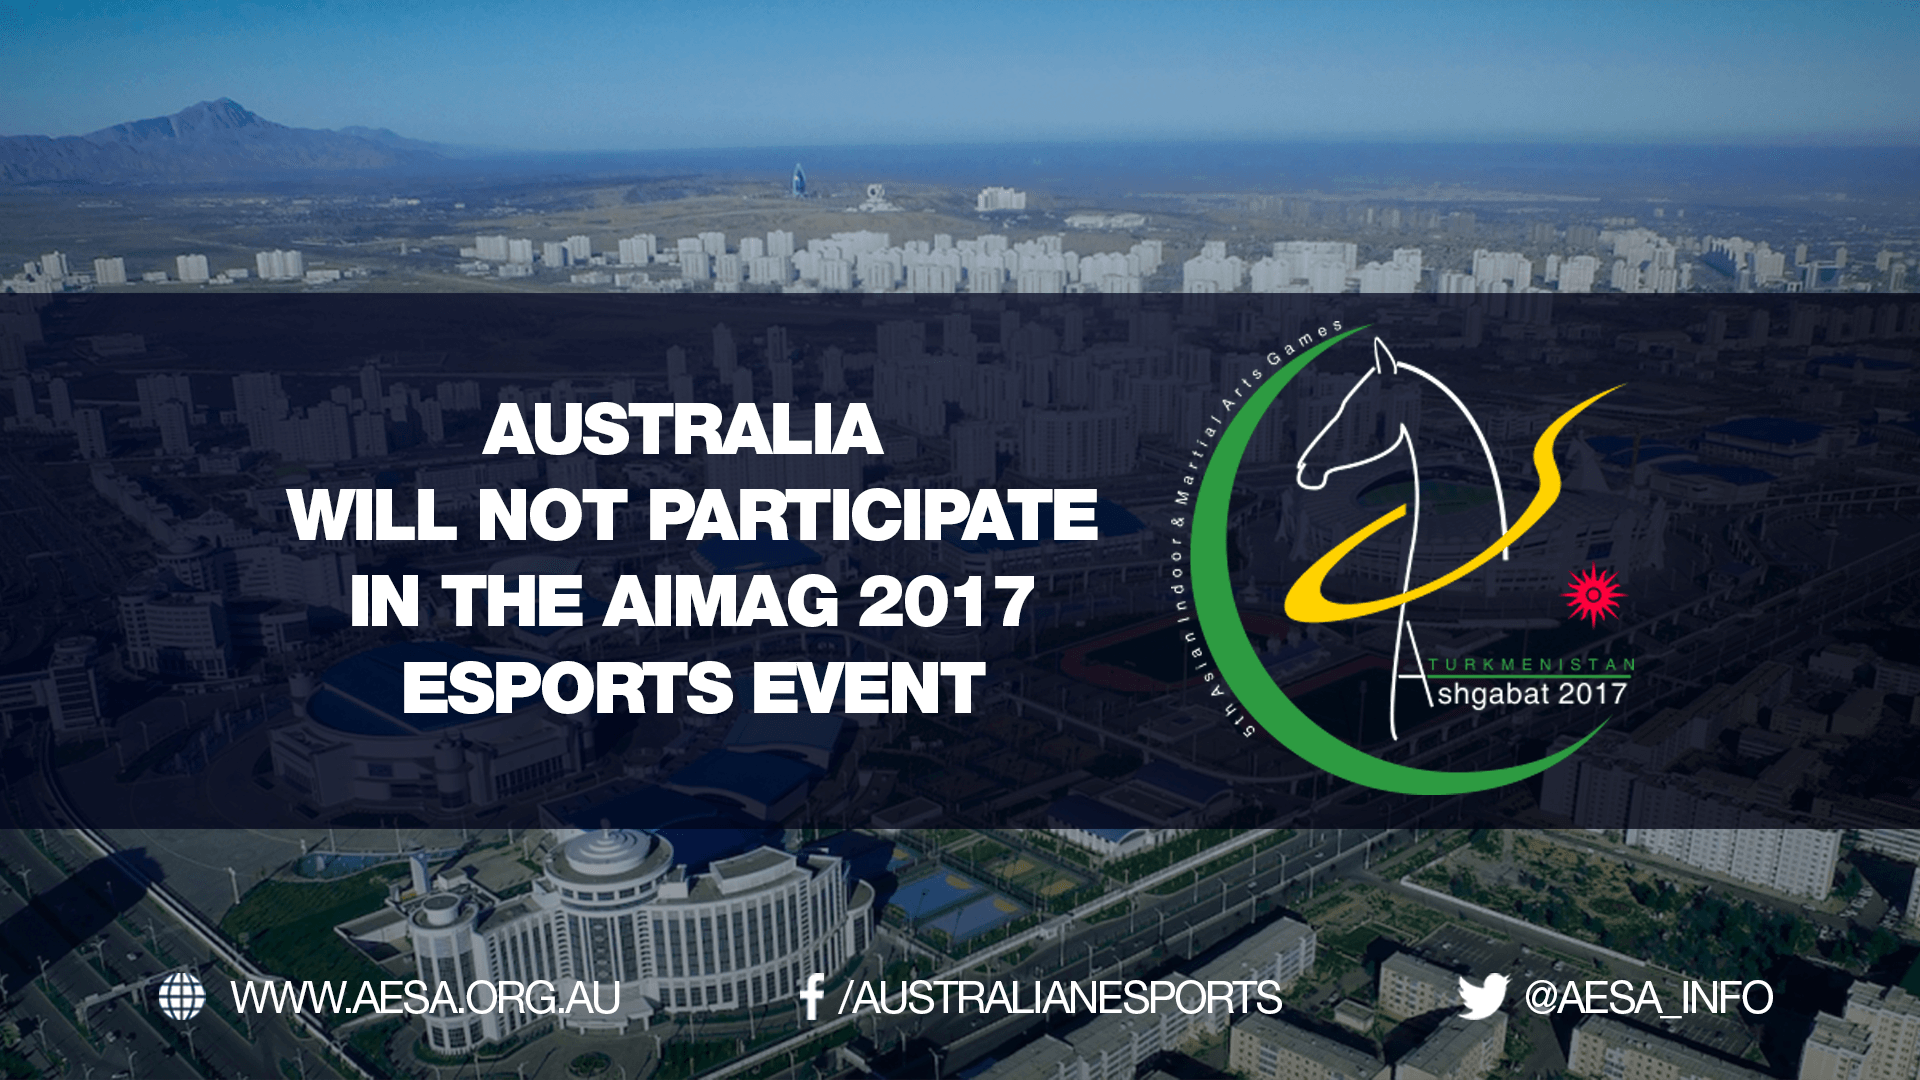 Australia will not participate in AIMAG 2017 esports event